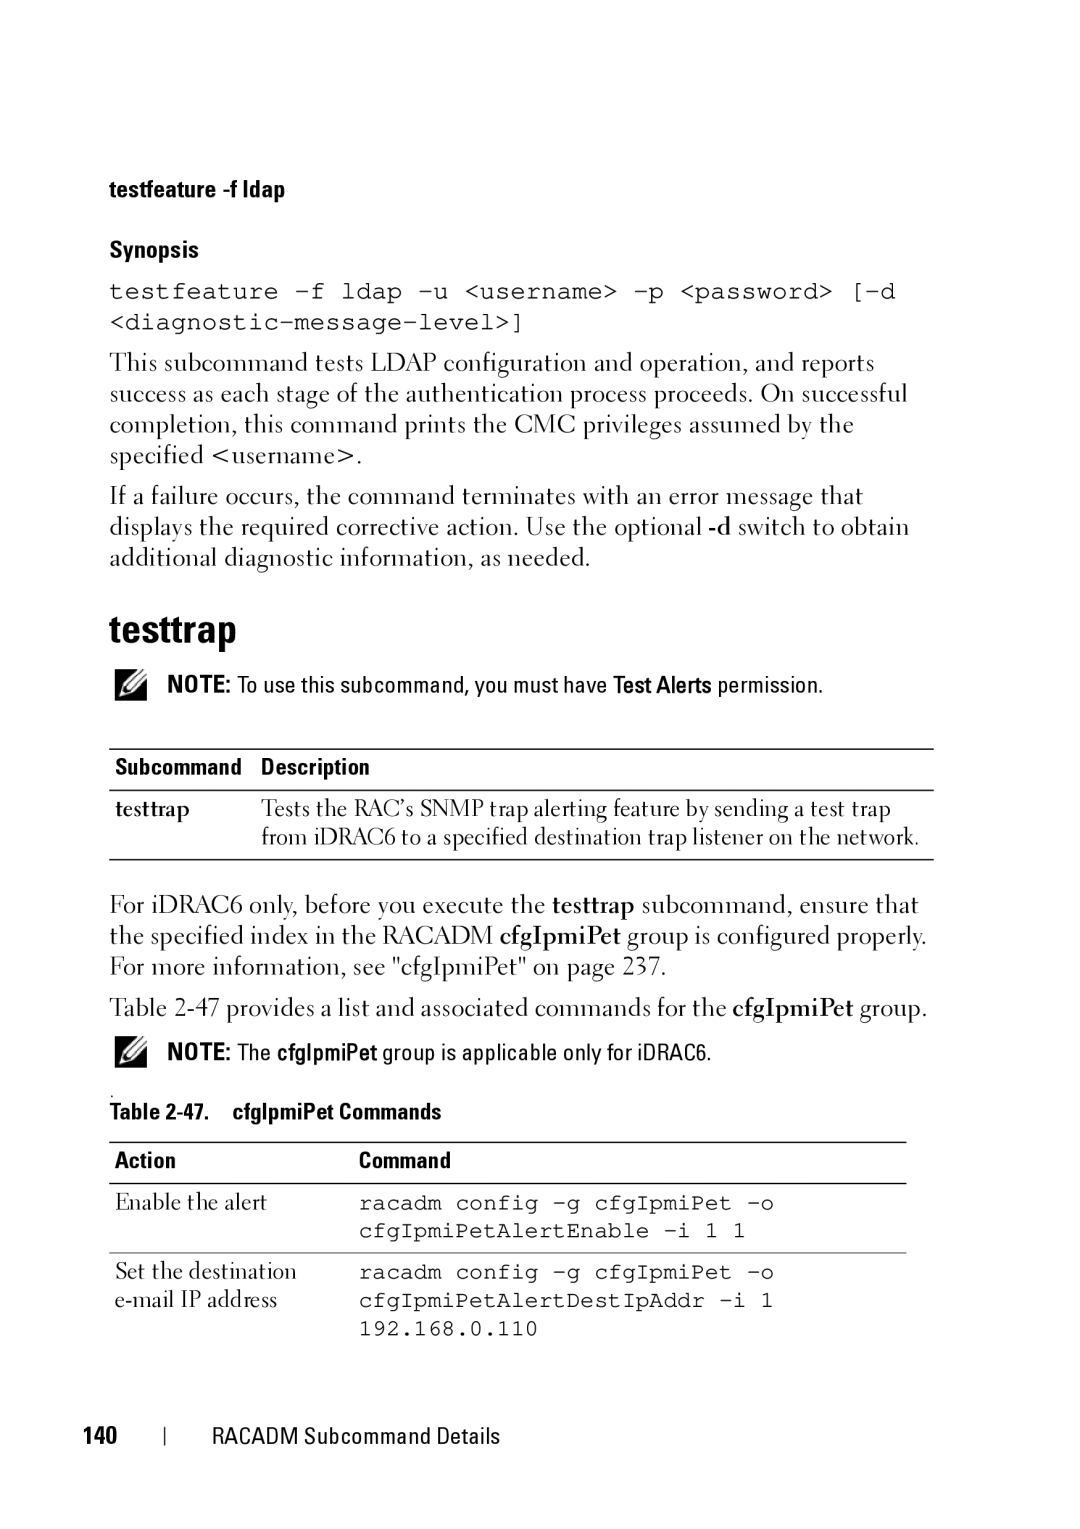 Dell CMC 3.2, IDRAC6 1.95, IDRAC6 3.5 manual Testtrap, Testfeature -f ldap Synopsis, 140, cfgIpmiPet Commands Action 